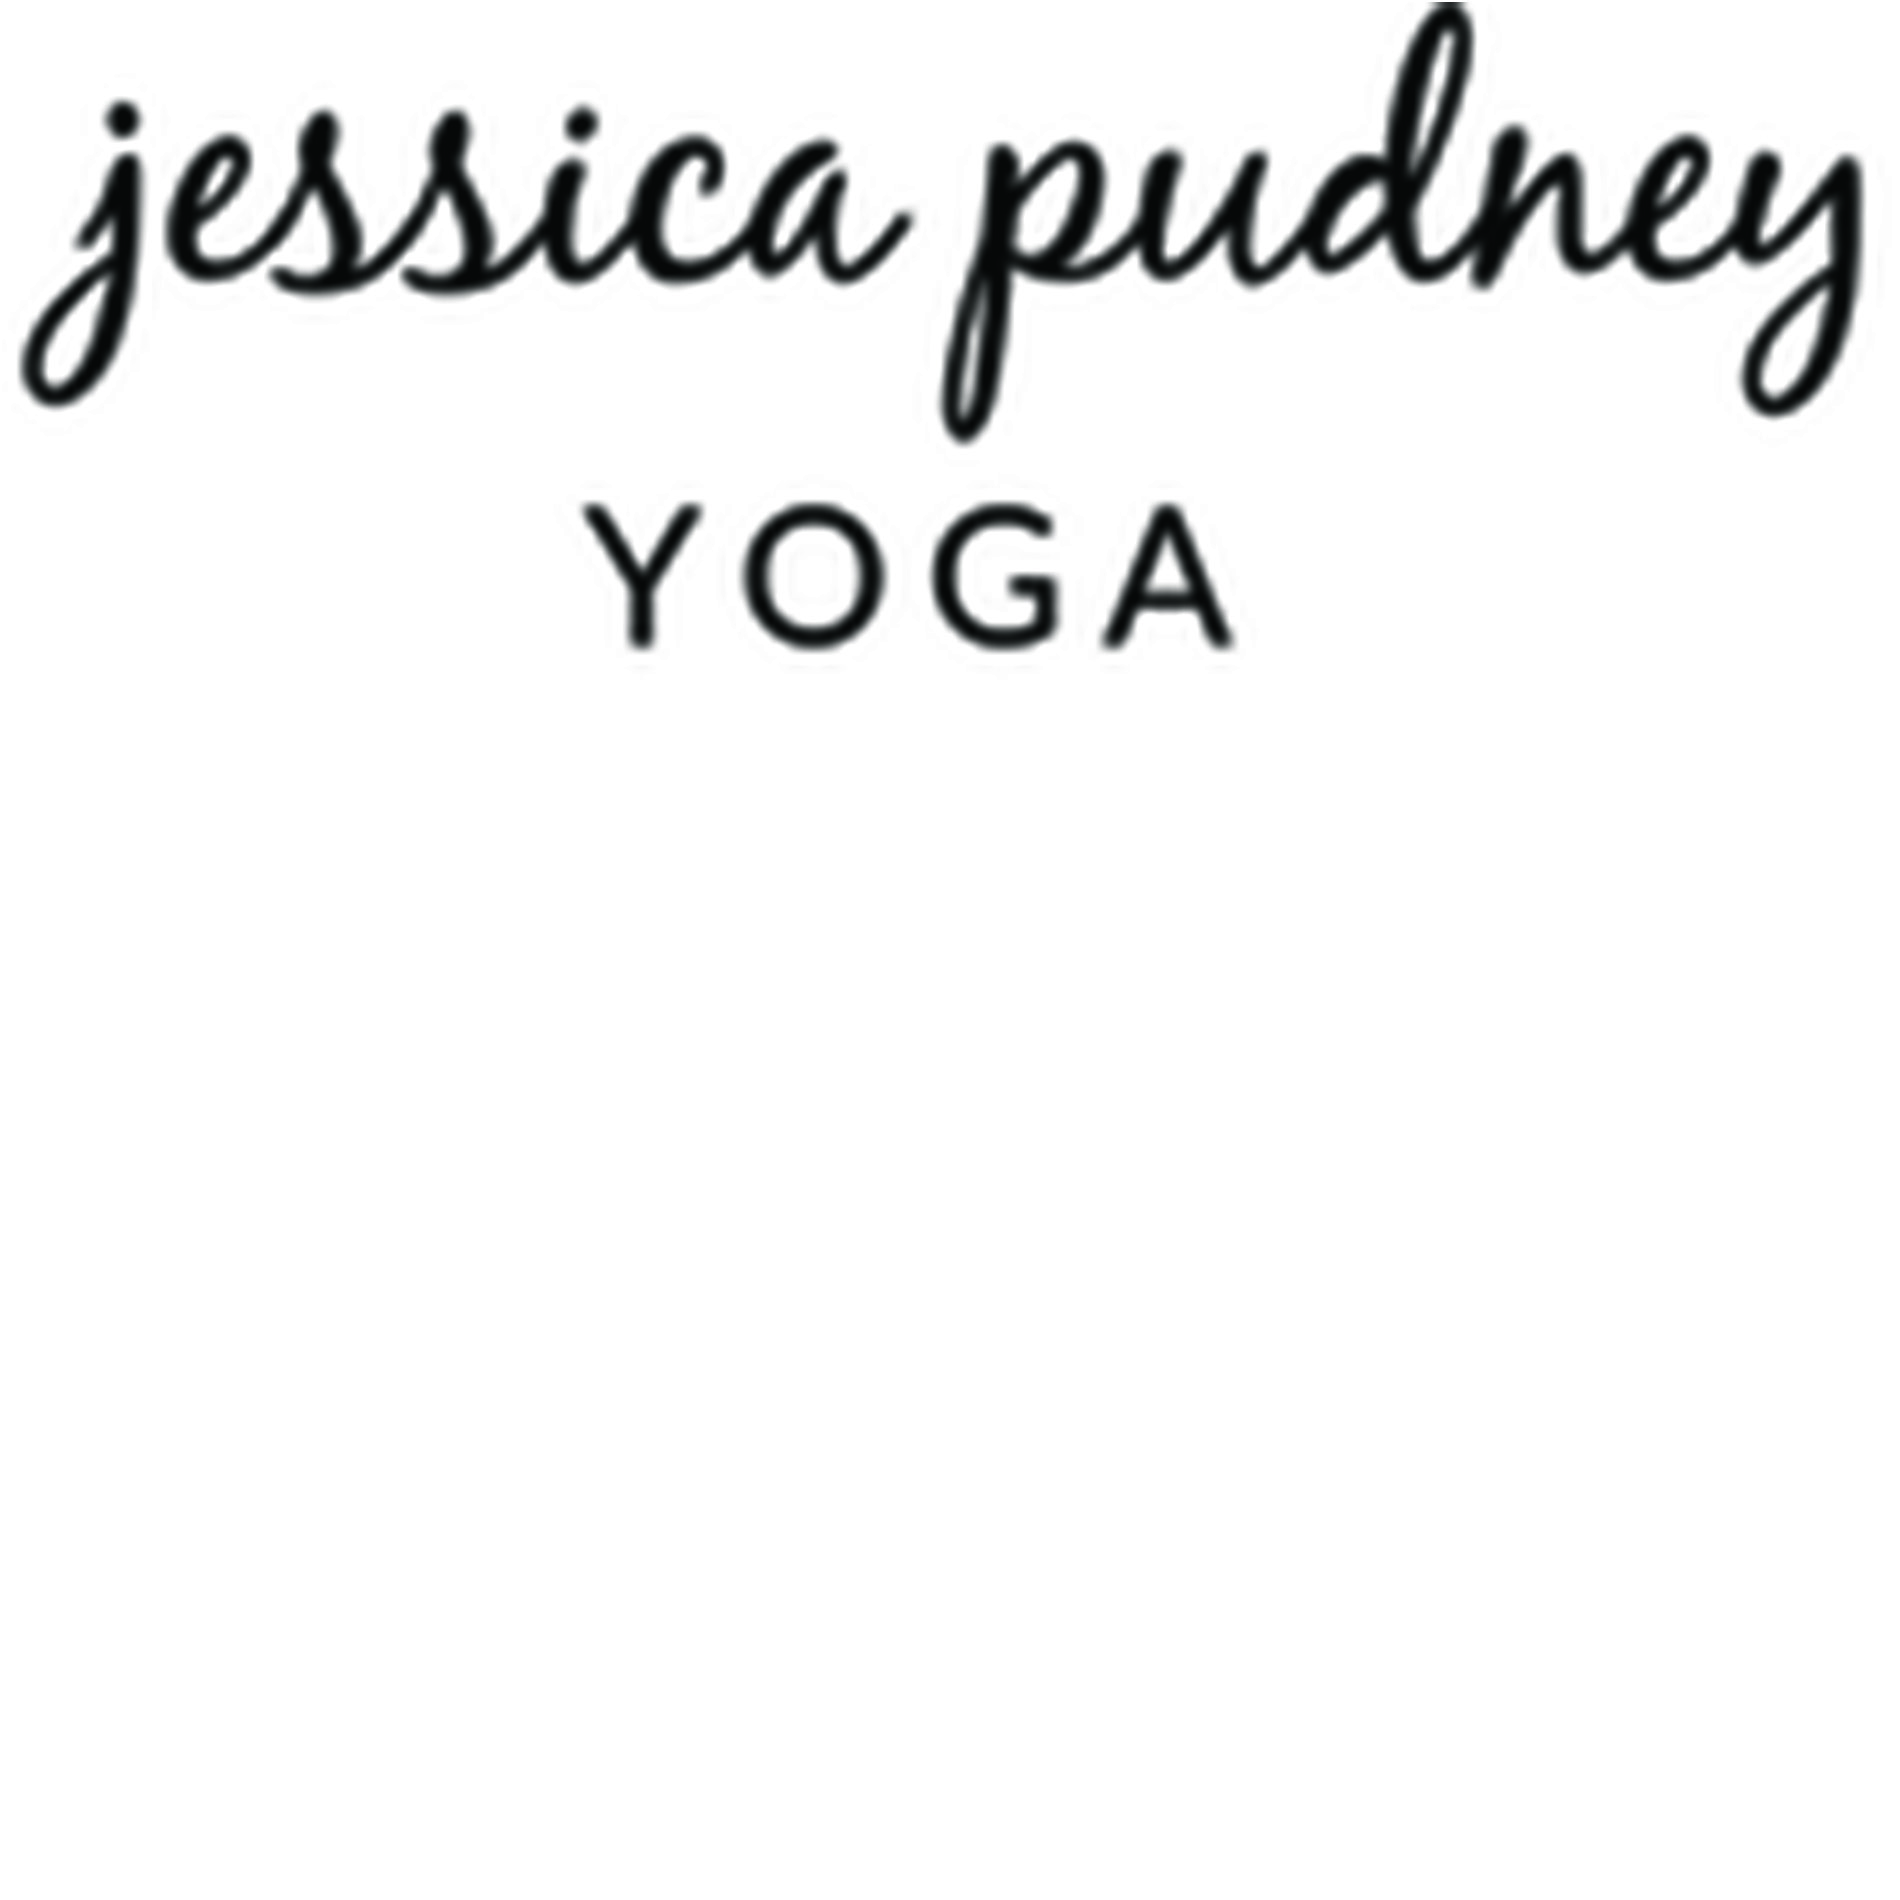 Jessica Pudney Yoga logo